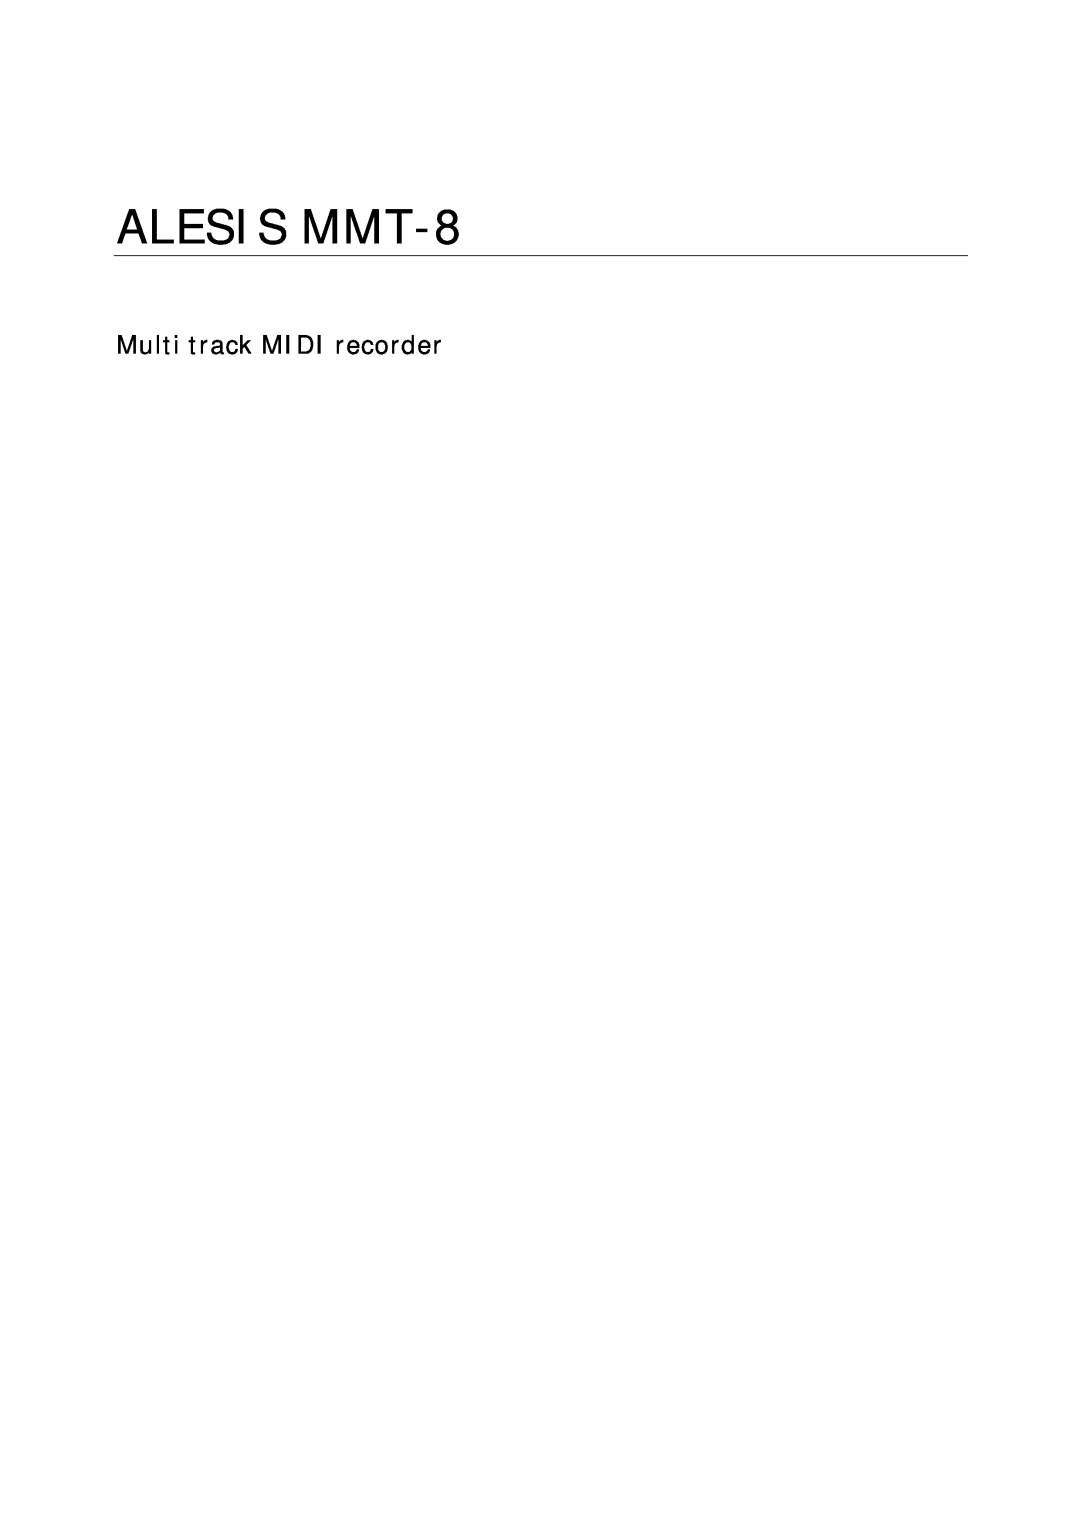 Alesis manual ALESIS MMT-8, Multi track MIDI recorder 